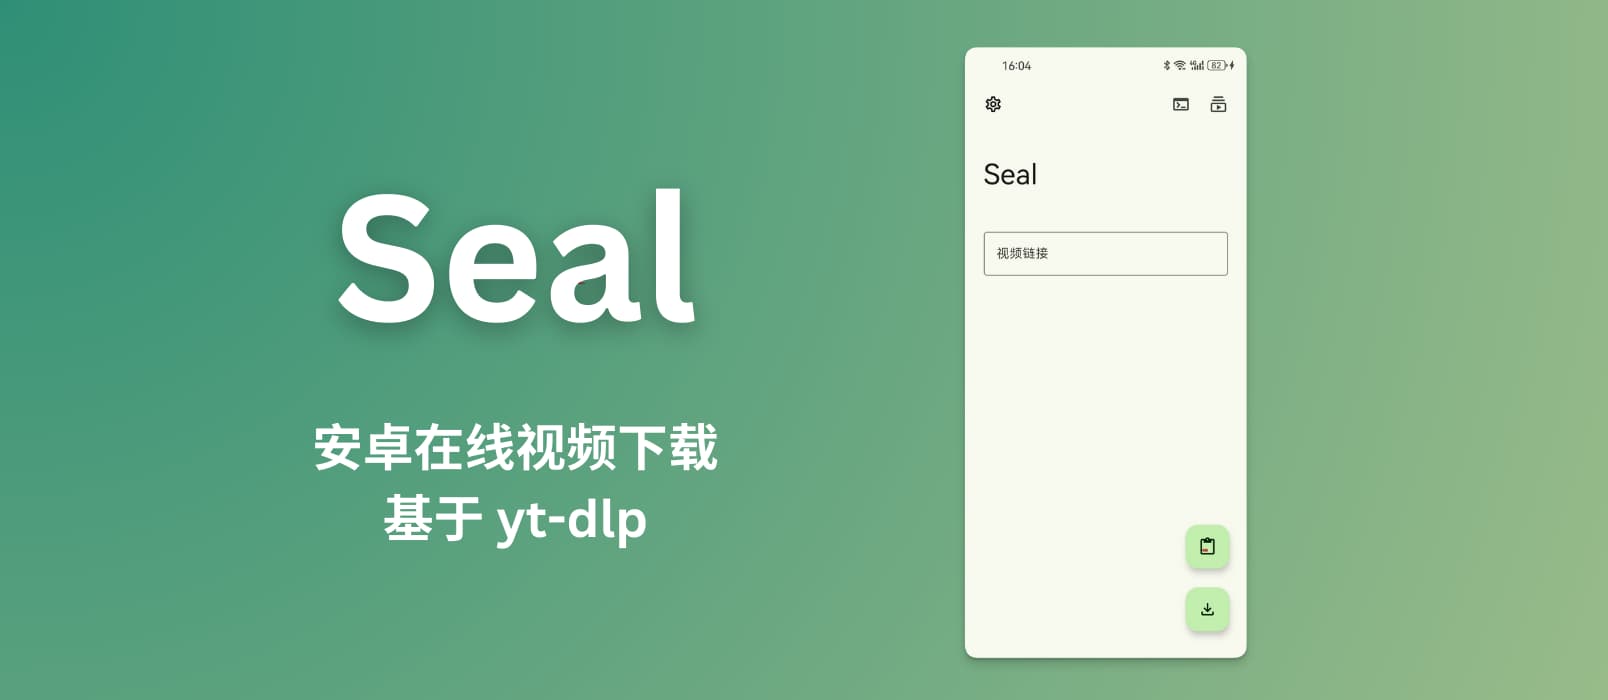 Seal - 基于 yt-dlp 的安卓在线视频下载应用，支持数千在线视频平台 9